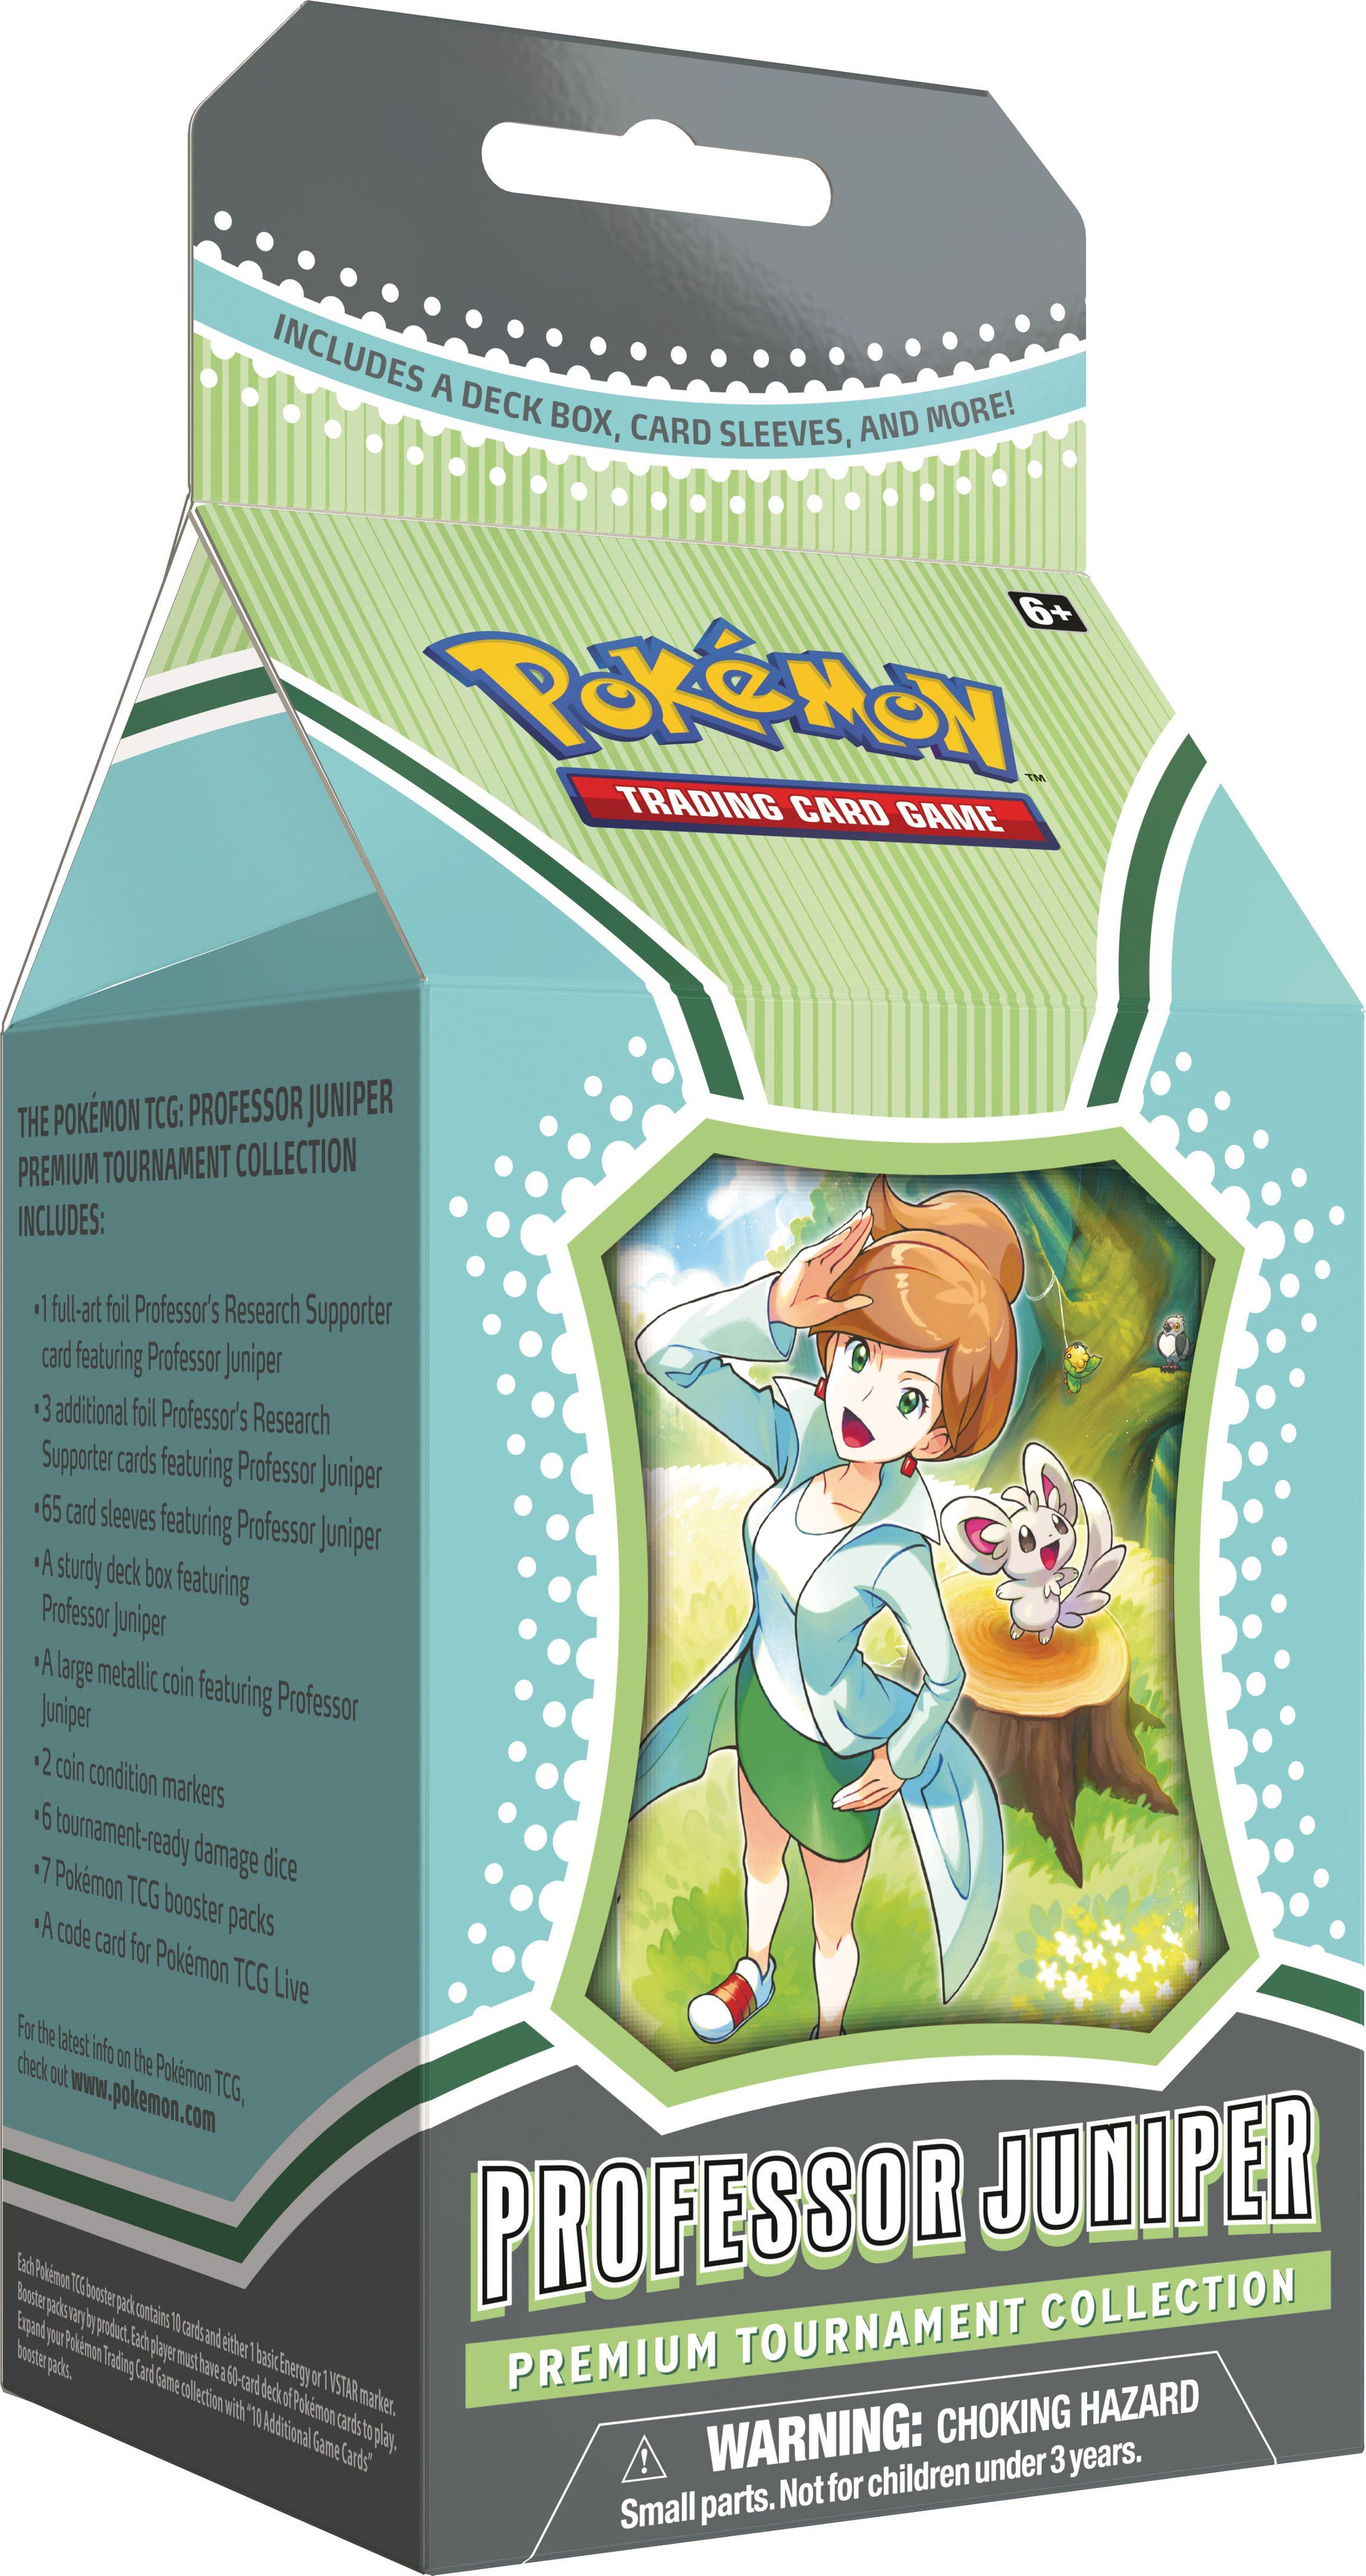 Pokémon Trading Card Game: Professor Juniper Premium Tournament Collection 290-82899 - Best Buy | Best Buy U.S.